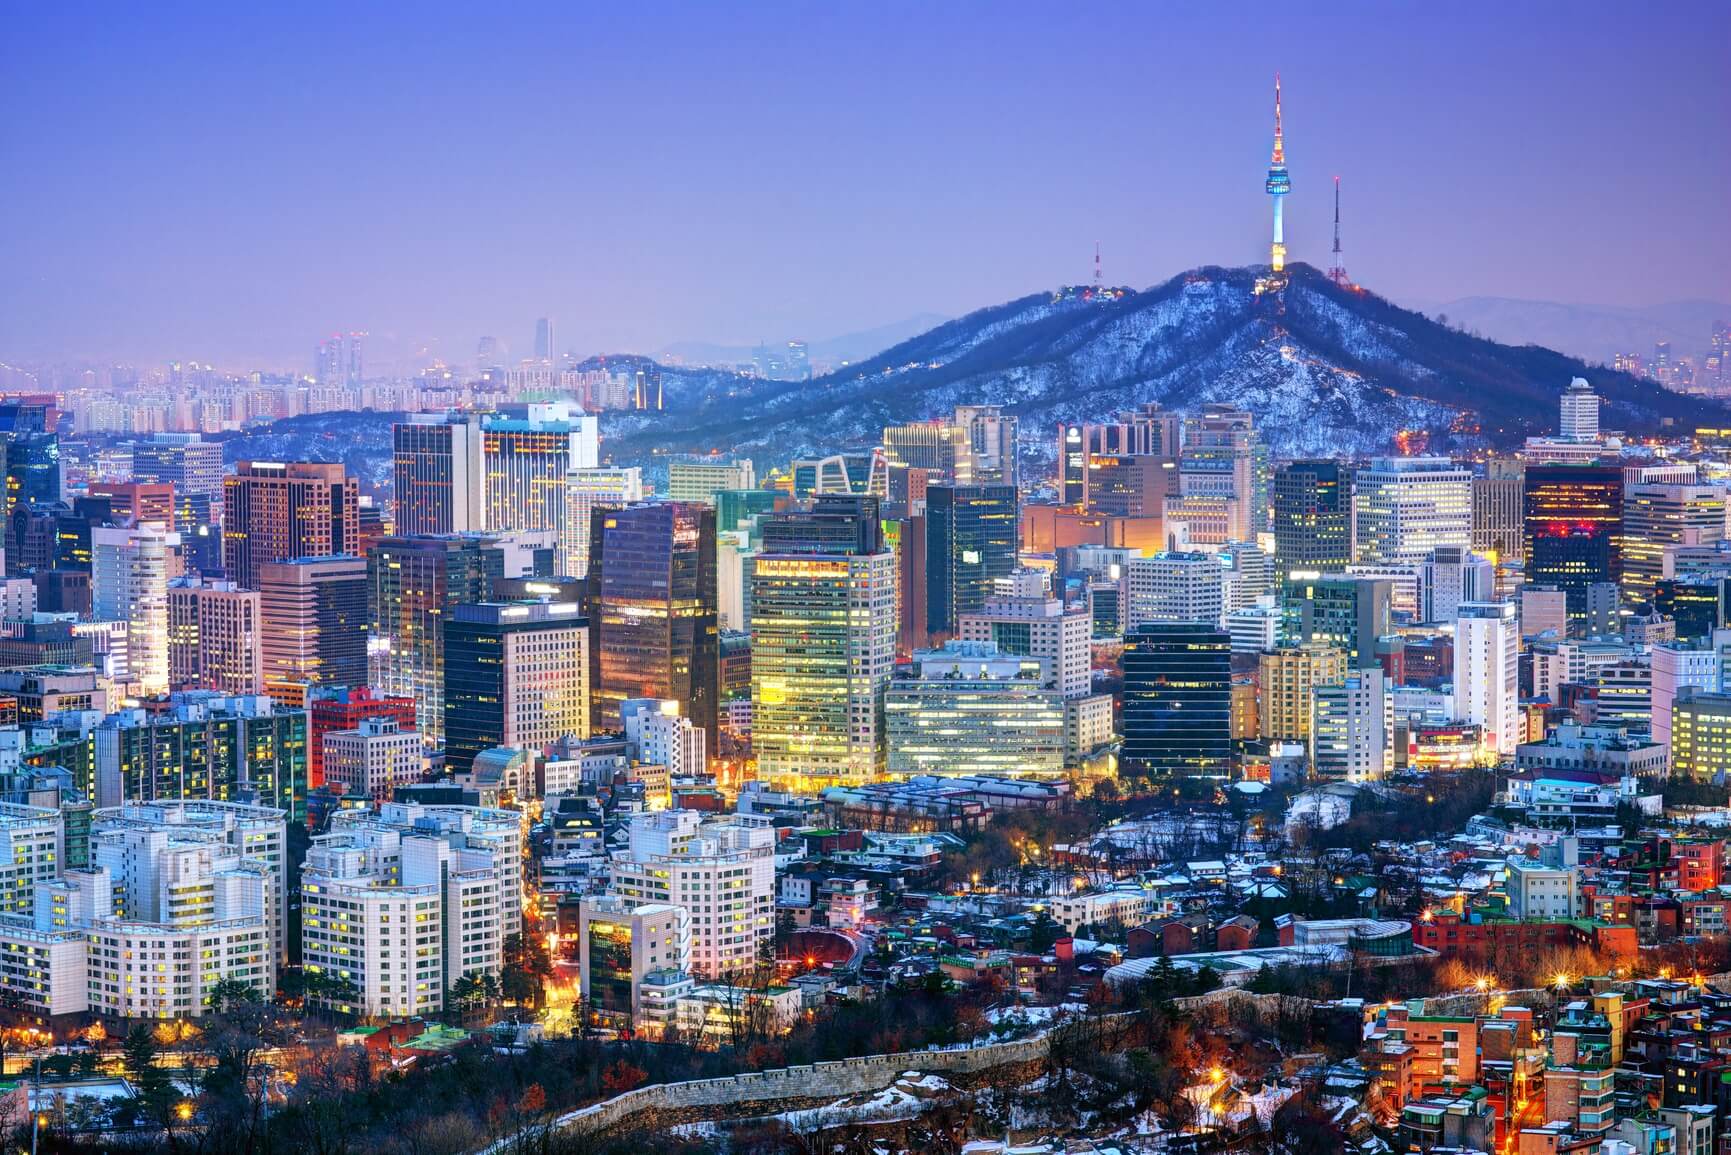 Flight deals from Zurich, Switzerland to Seoul, South Korea | Secret Flying